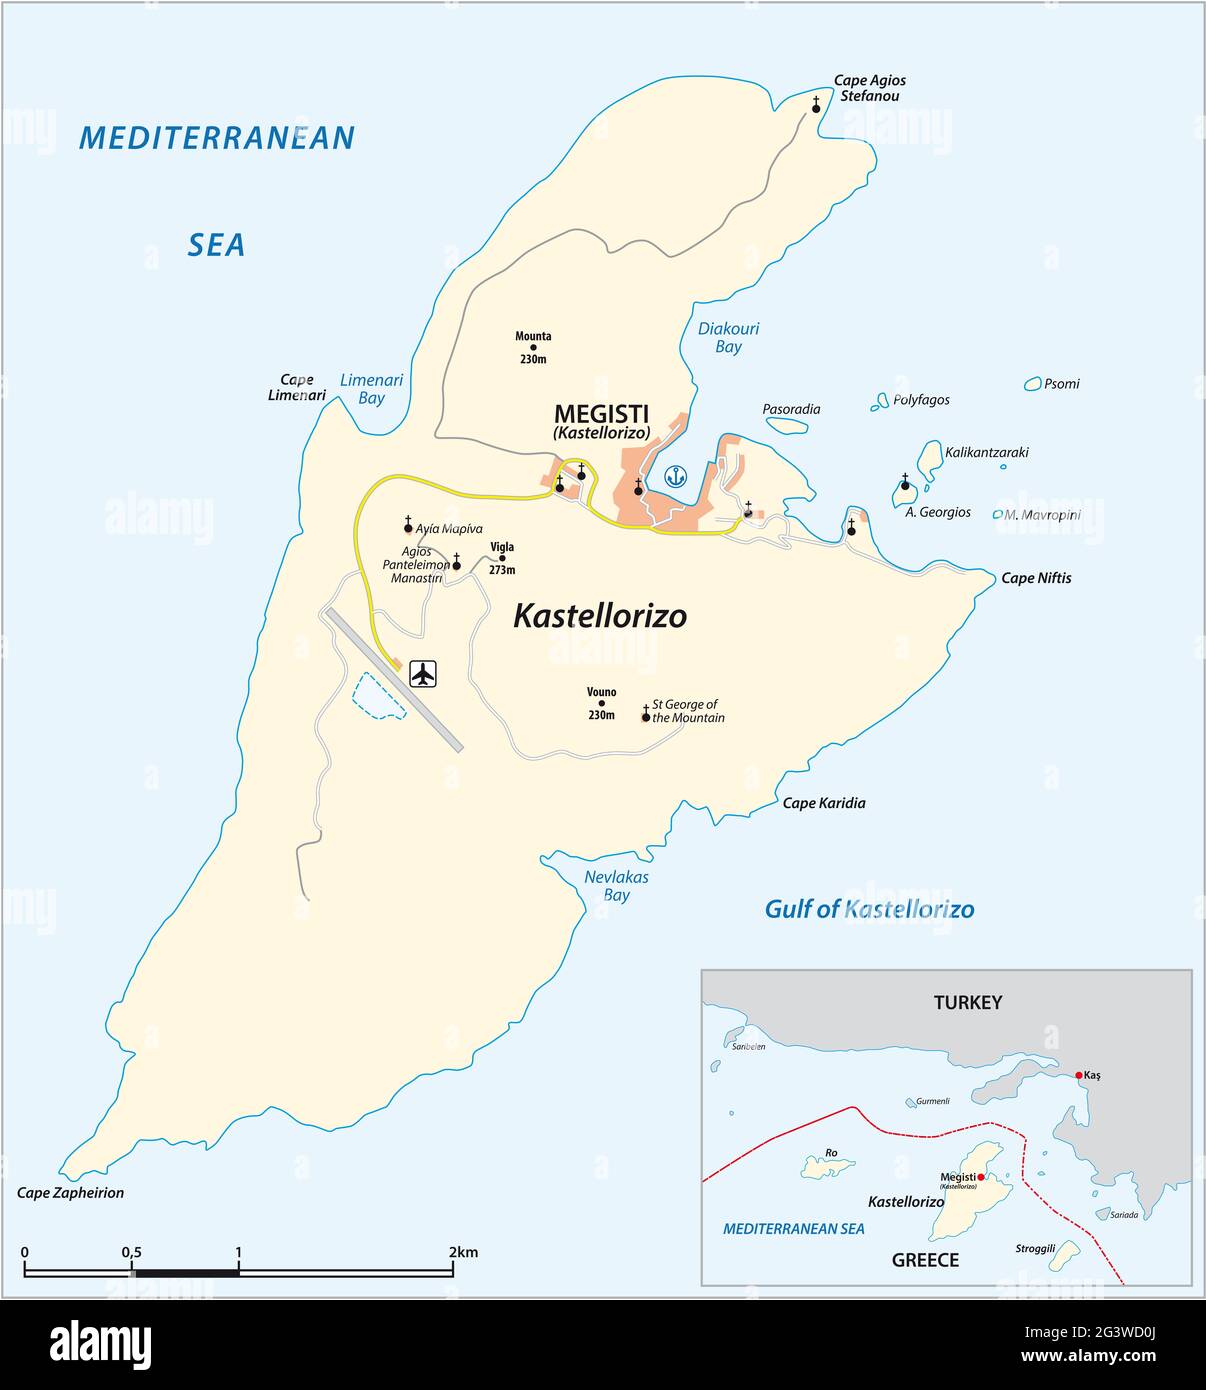 Mapa vectorial de la isla mediterránea griega de Kastellorizo Foto de stock